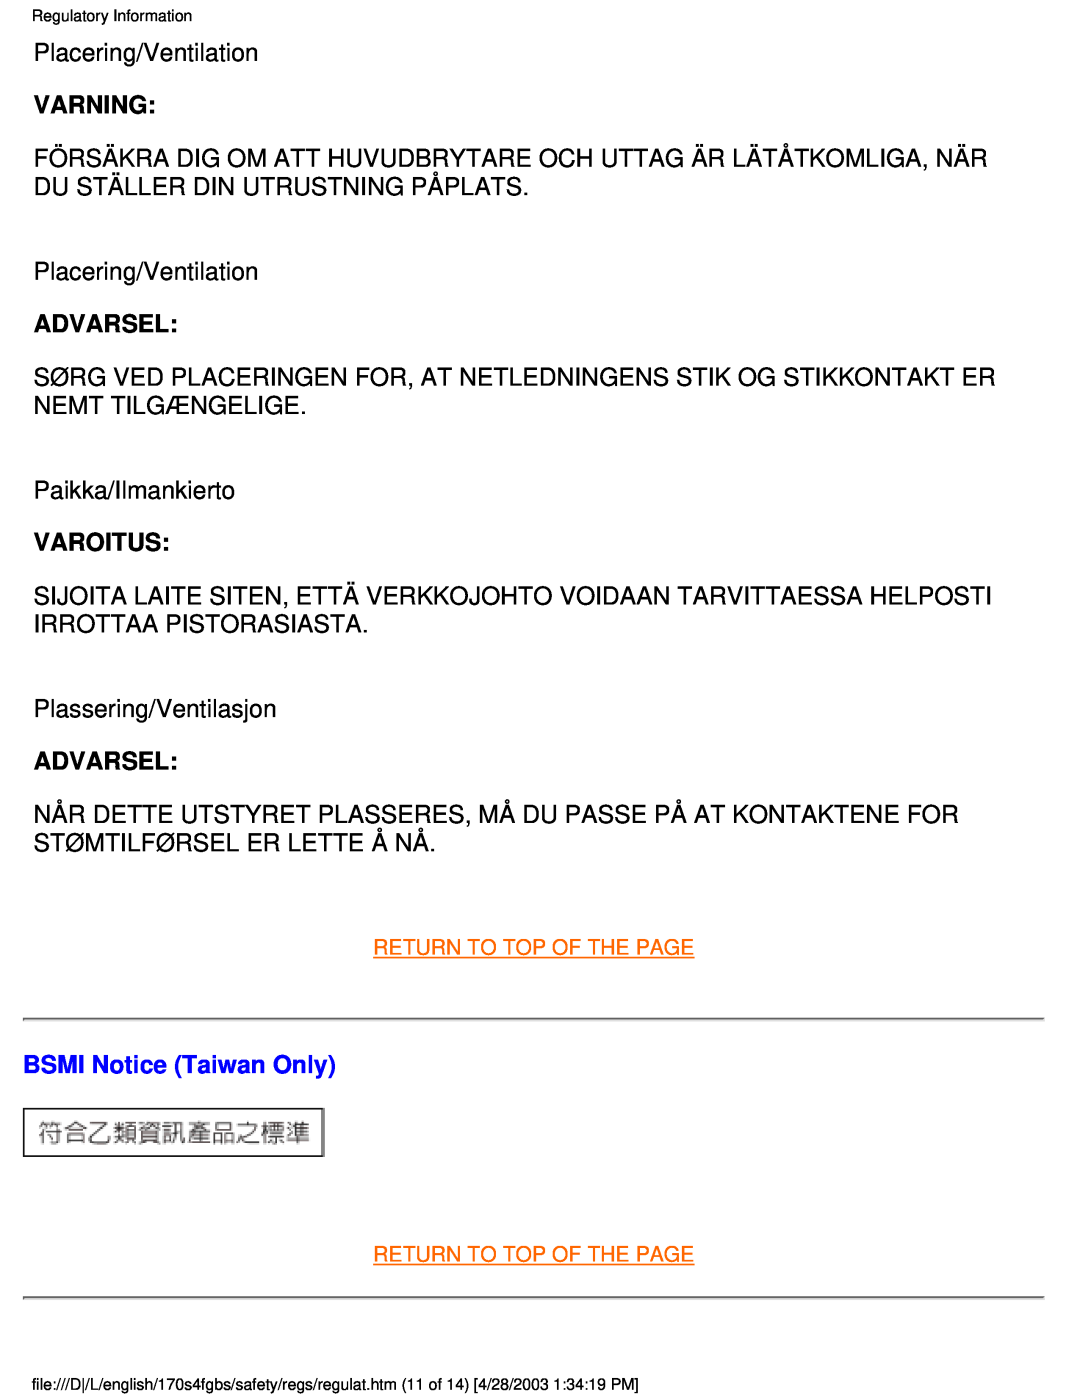 Philips 170S4FS, 170S4FG user manual Varning, Advarsel, Varoitus, BSMI Notice Taiwan Only 